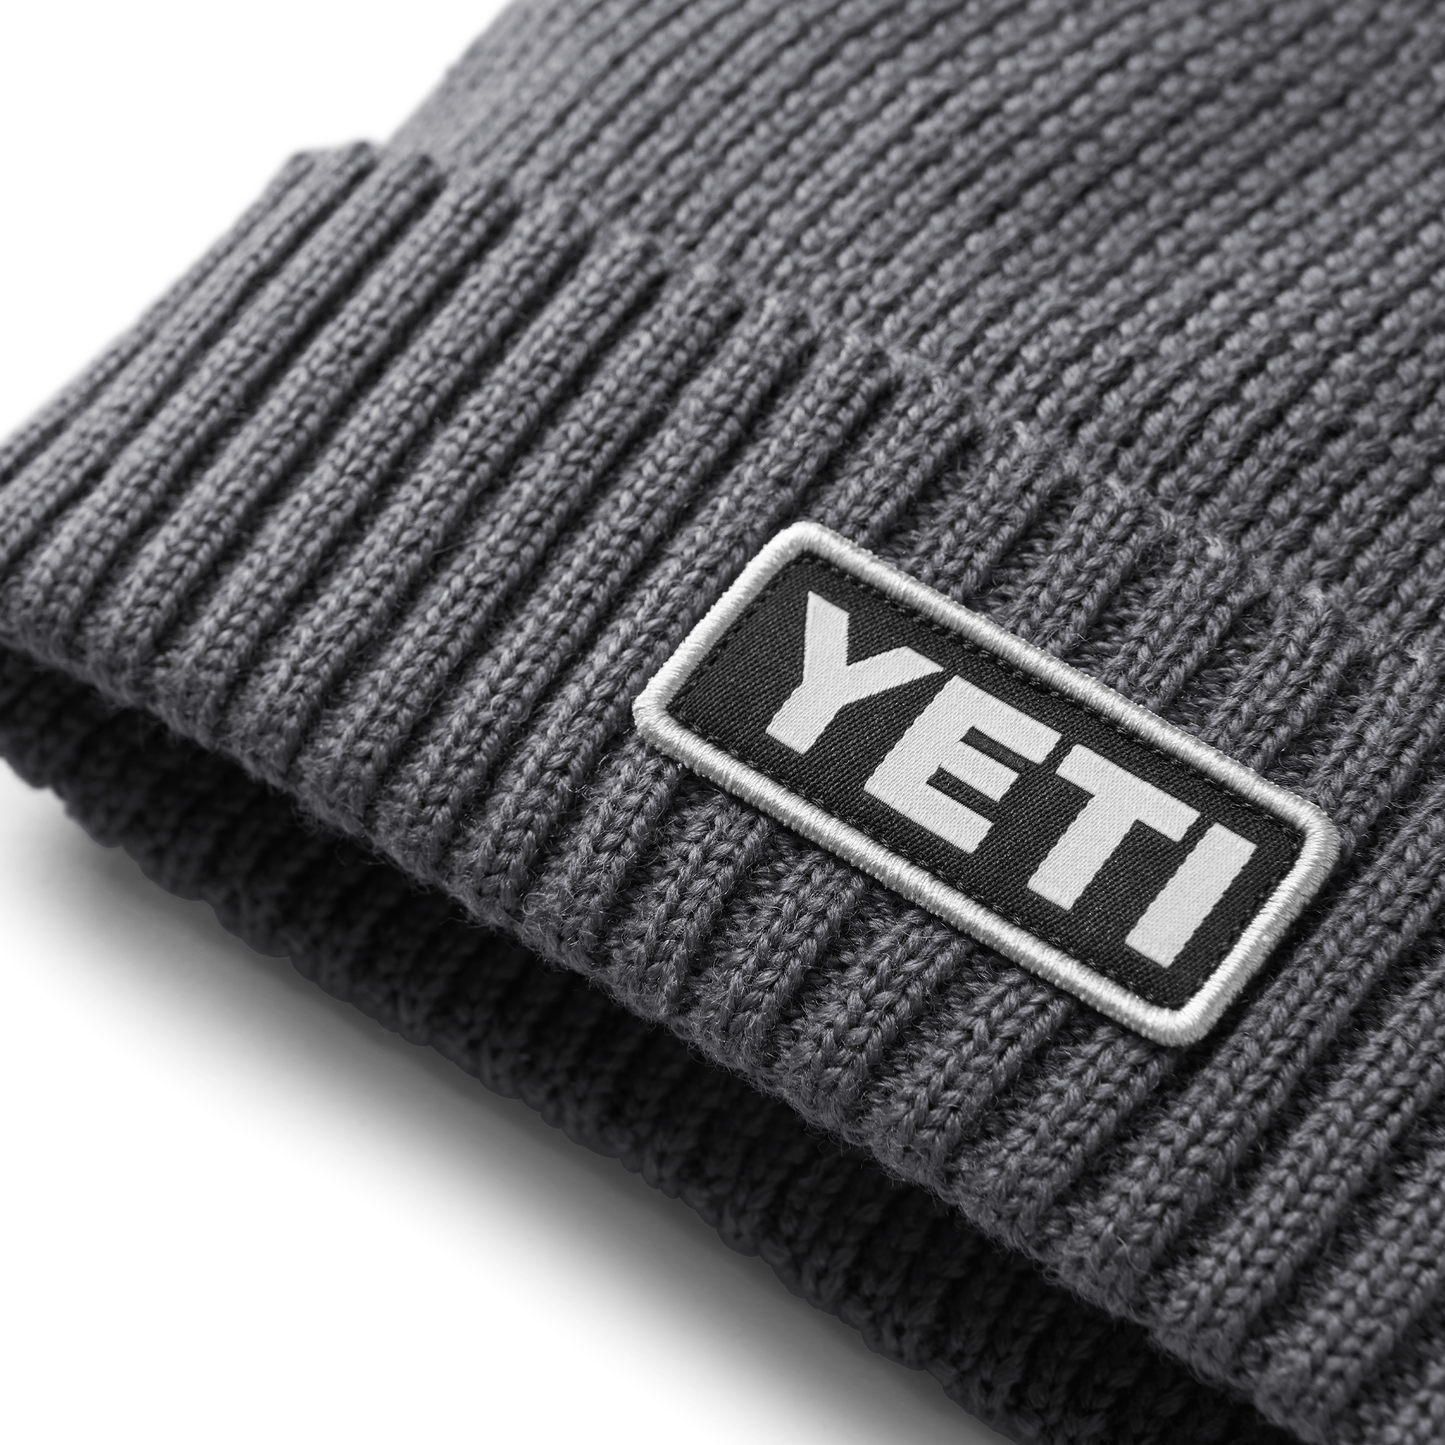 YETI Logo Beanie Hat Grey